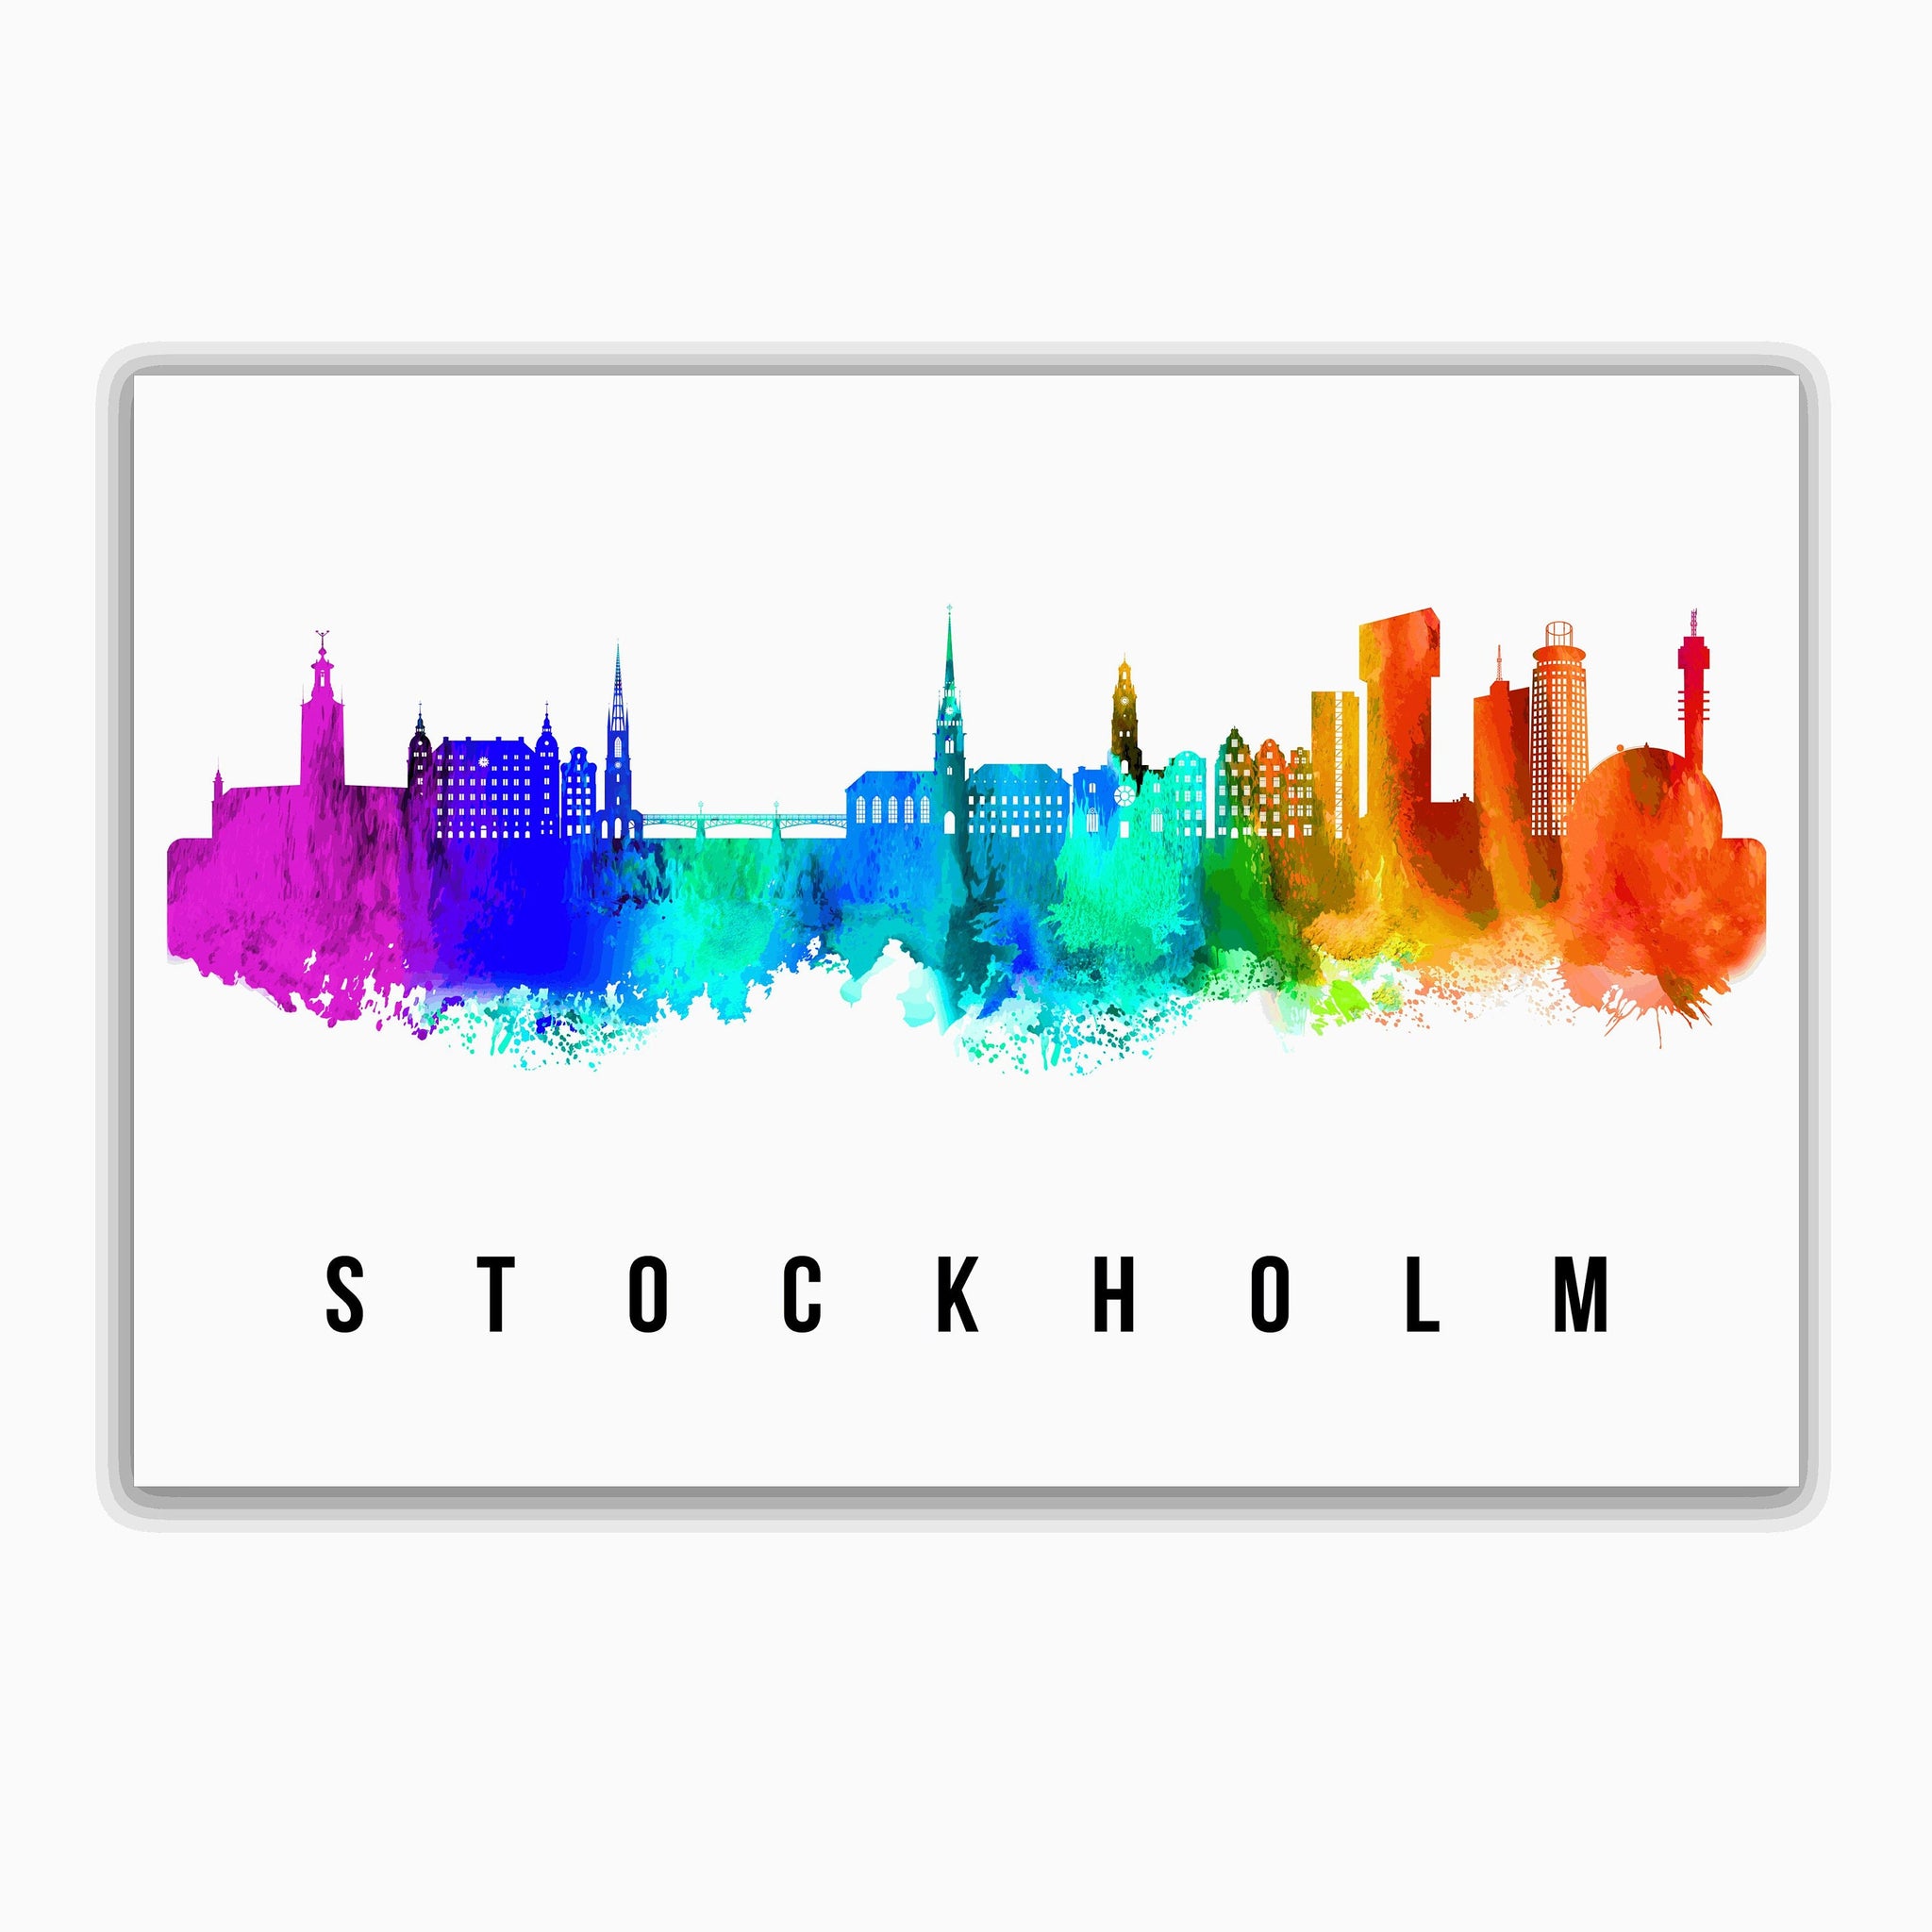 STOCKHOLM - SWEDEN Poster, Skyline Poster Cityscape and Landmark Stockholm City Illustration Home Wall Art, Office Decor